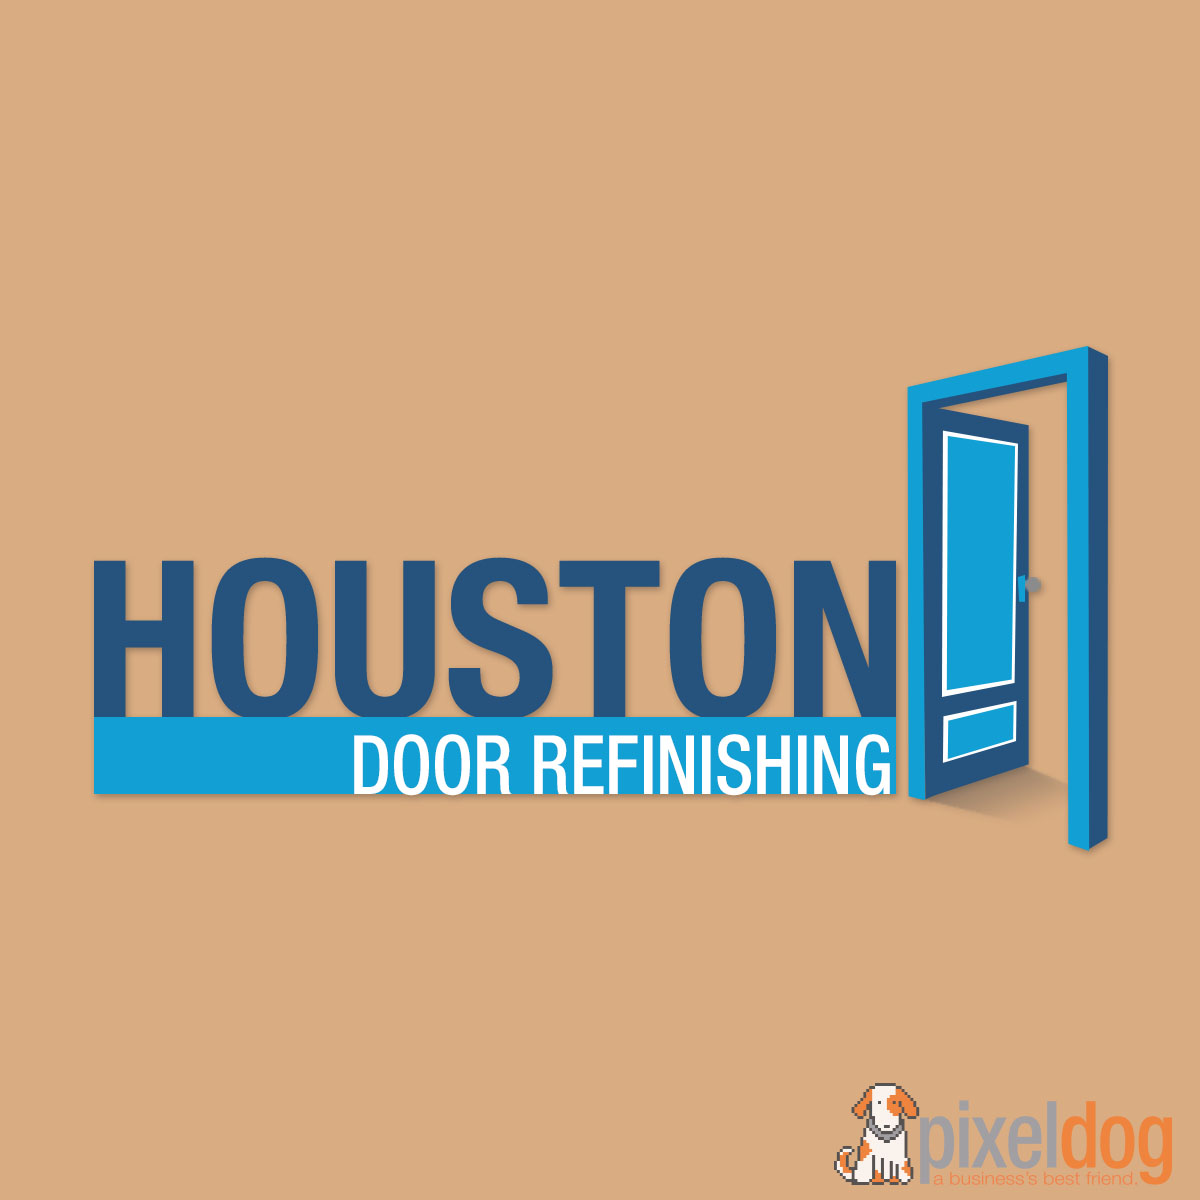 Houston Door Refinishing (Company)